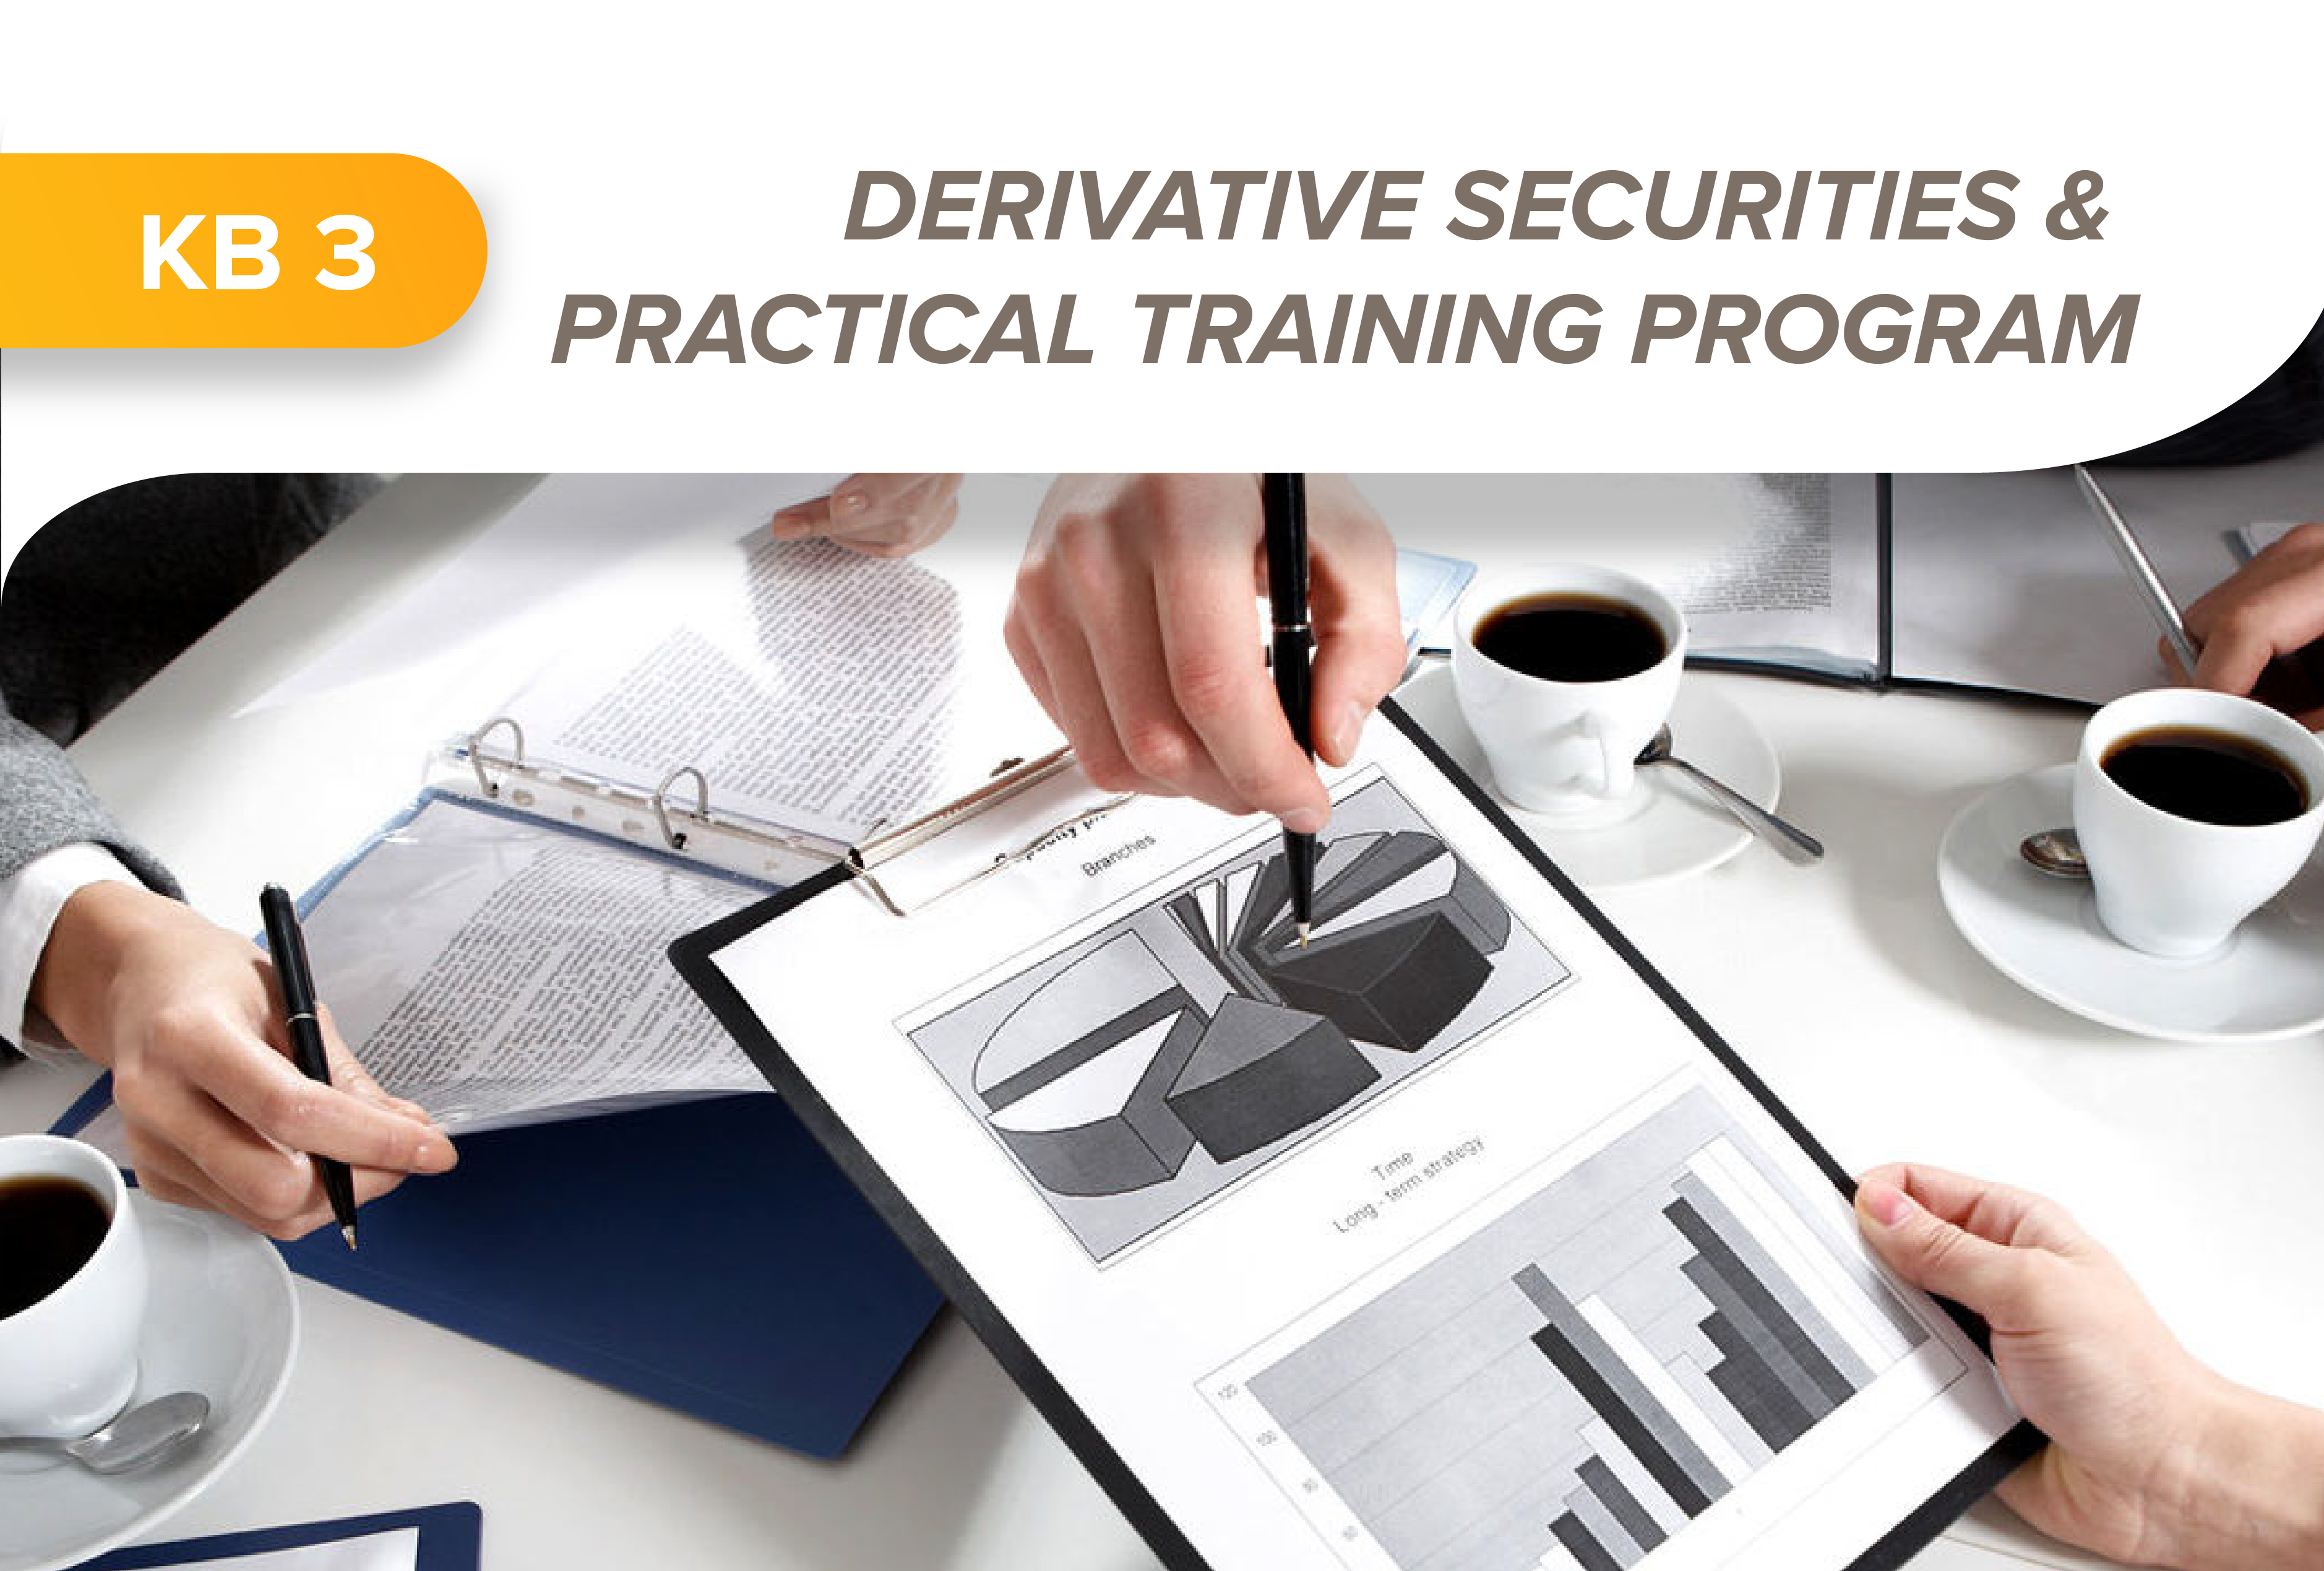 Derivative securities and practical programs